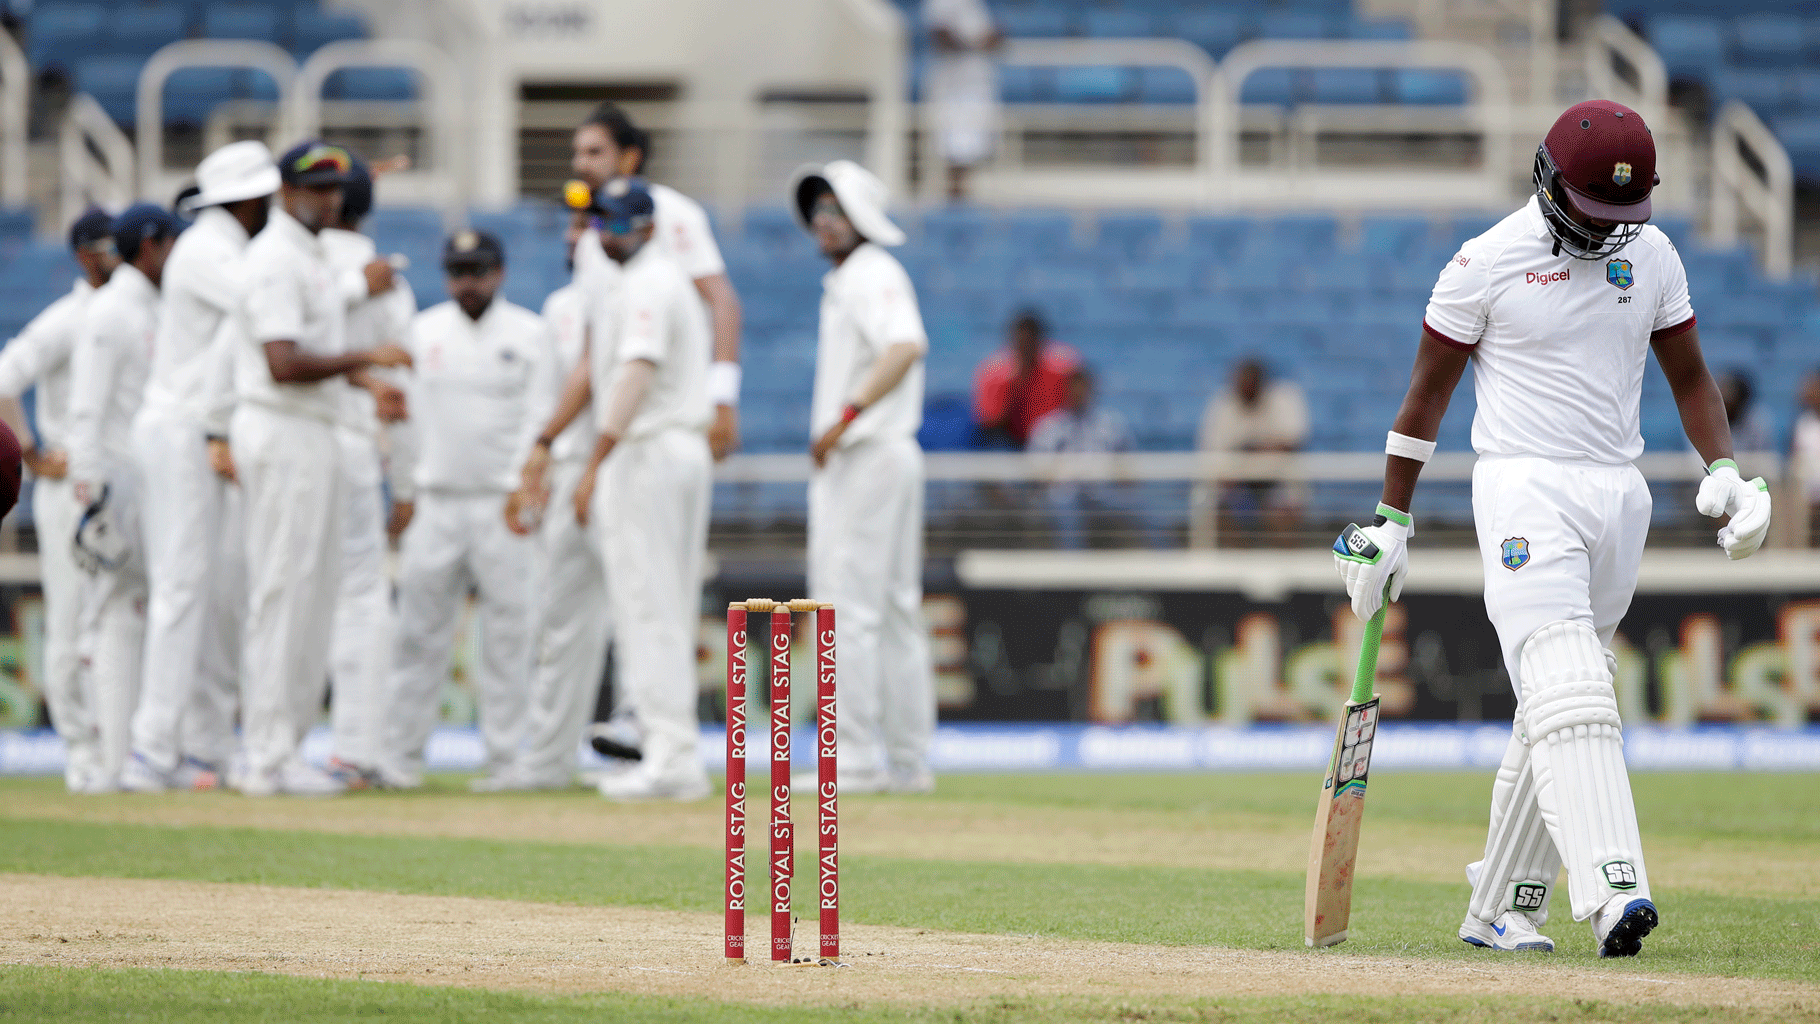 West Indian batsman Darren Bravo walks back to the pavilion as team India celebrates. (Photo: AP)